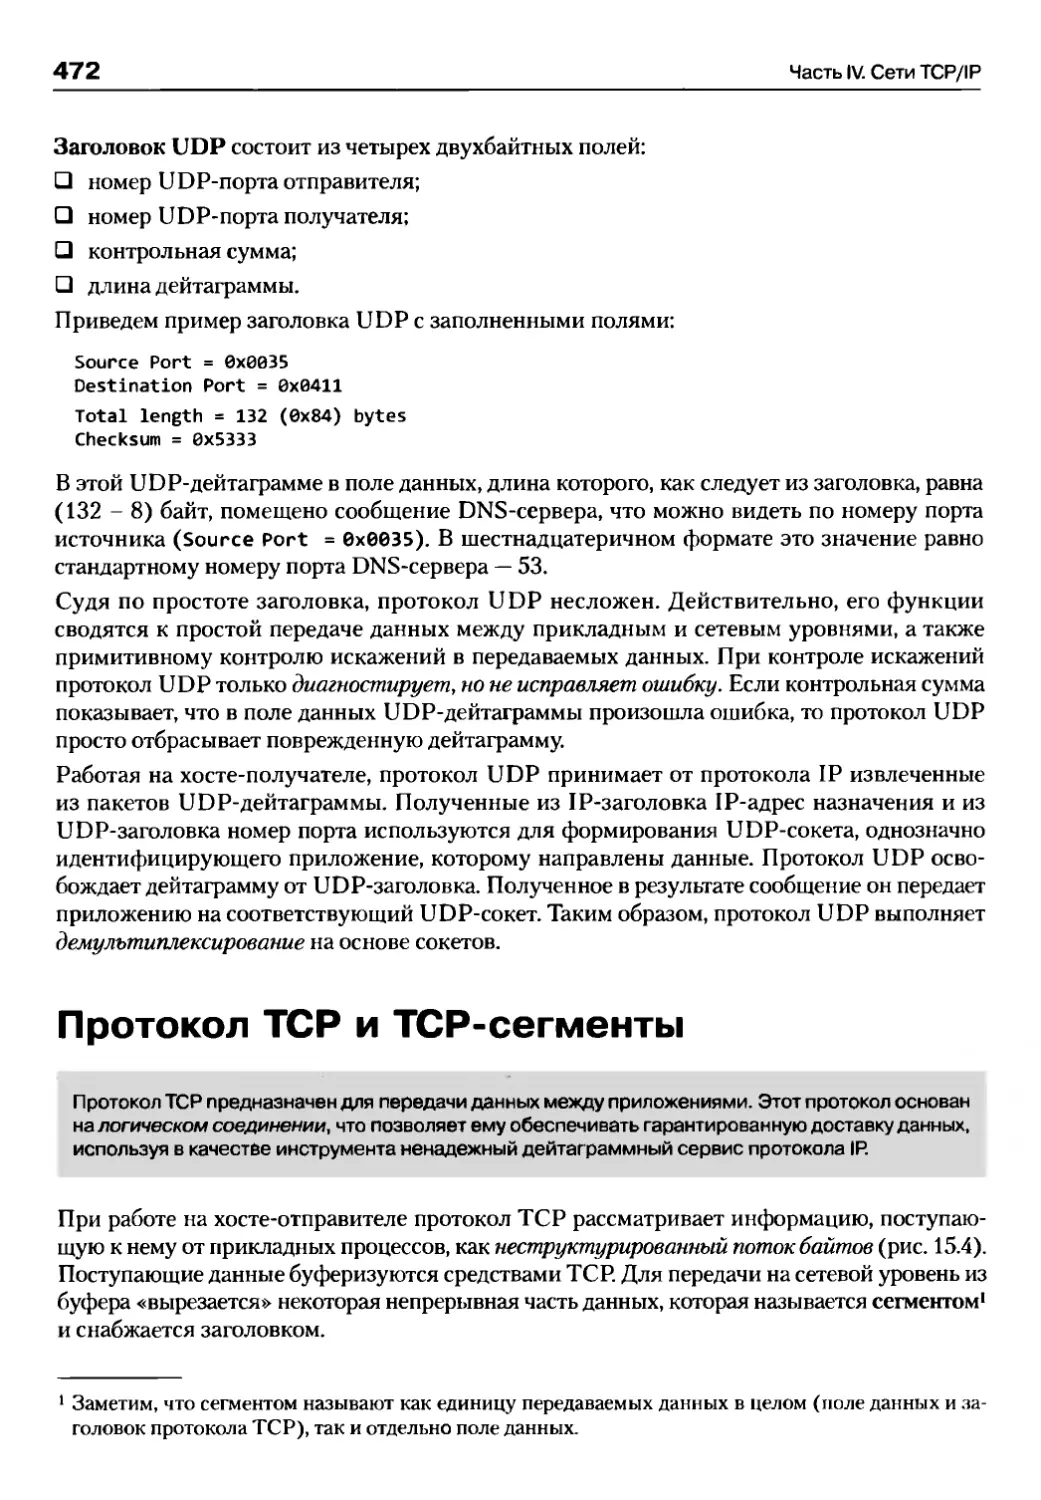 Протокол TCP и TCP-сегменты